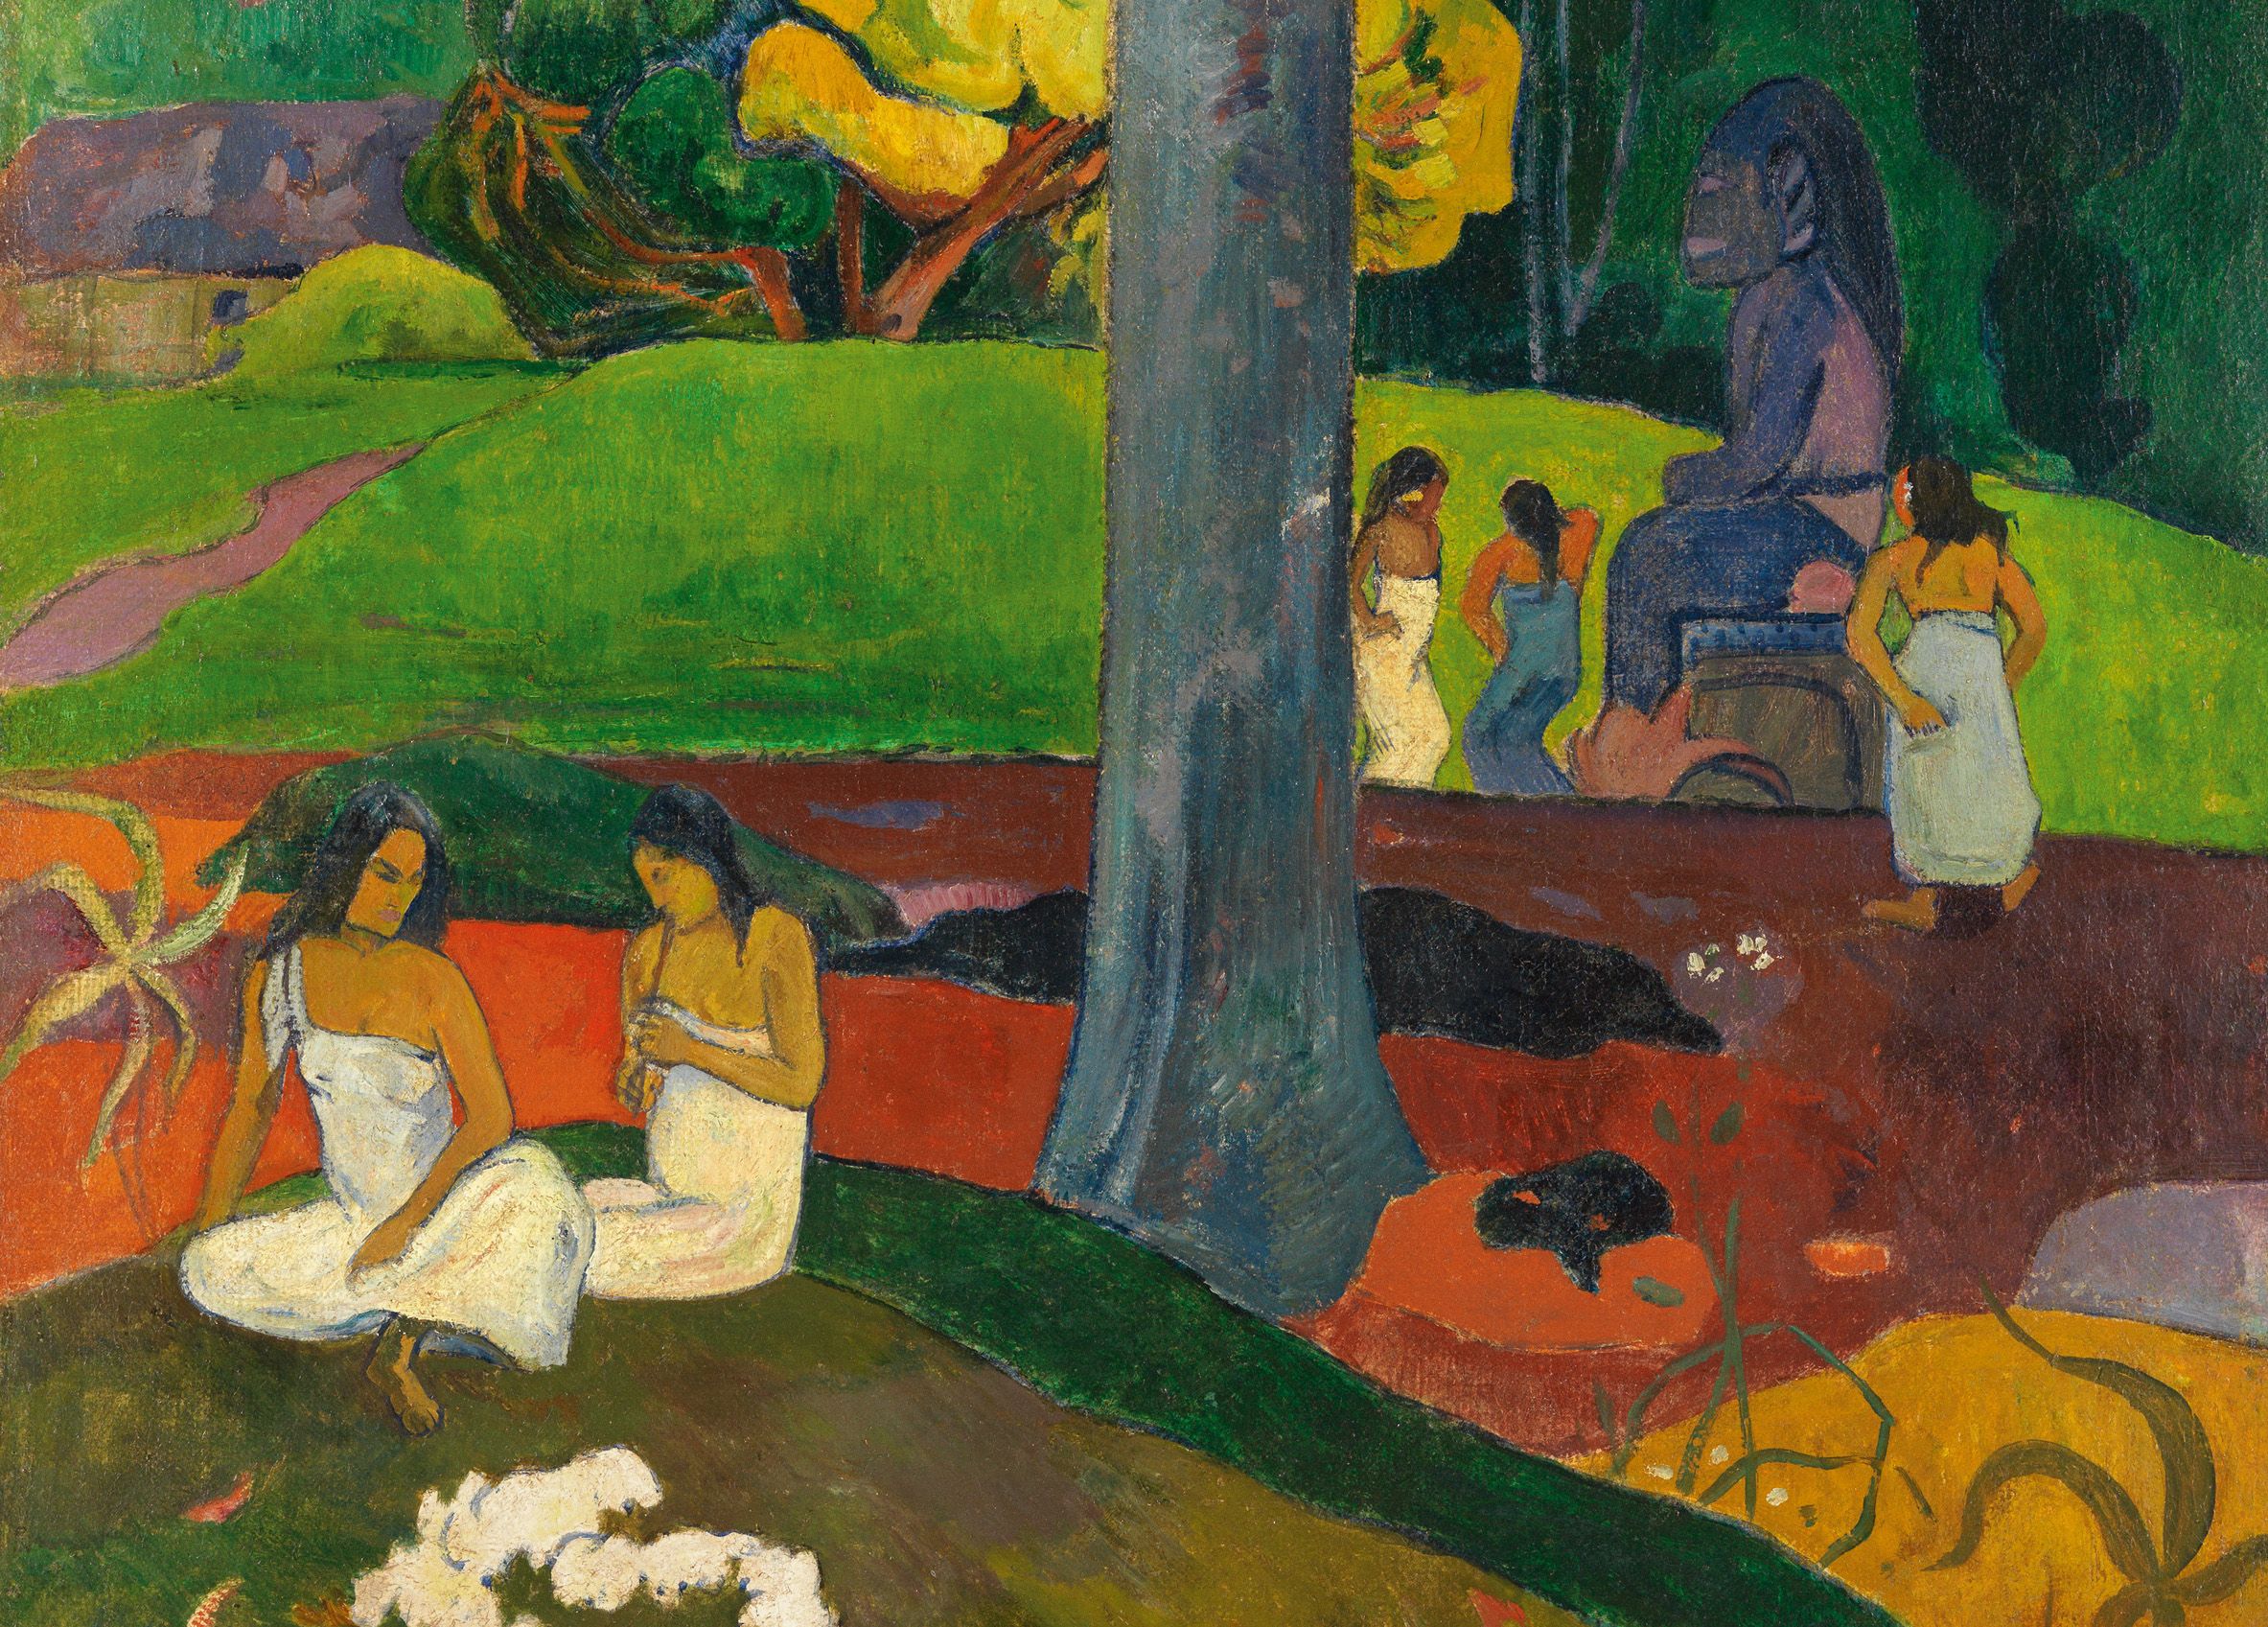 Gauguin: Metamorphoses at the MoMA